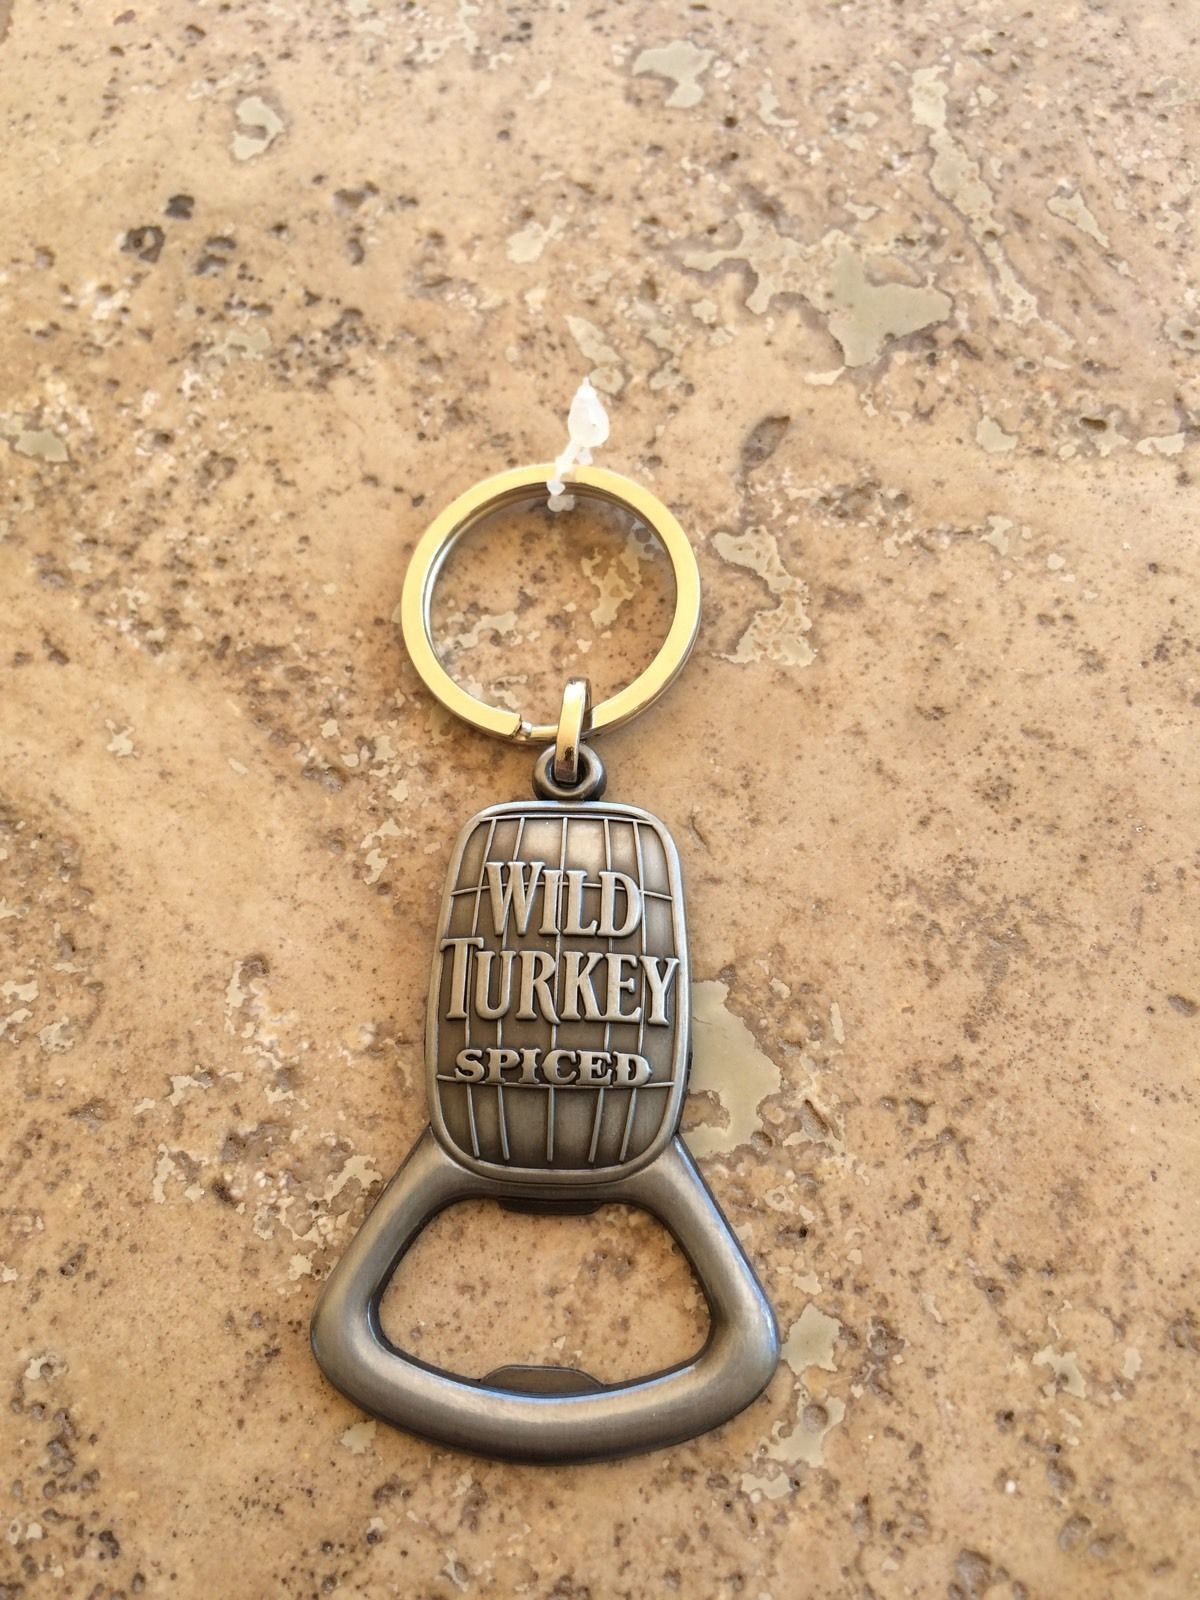 Wild Turkey Spiced Whiskey Key Chain Bottle Opener Brand New! - $6.92